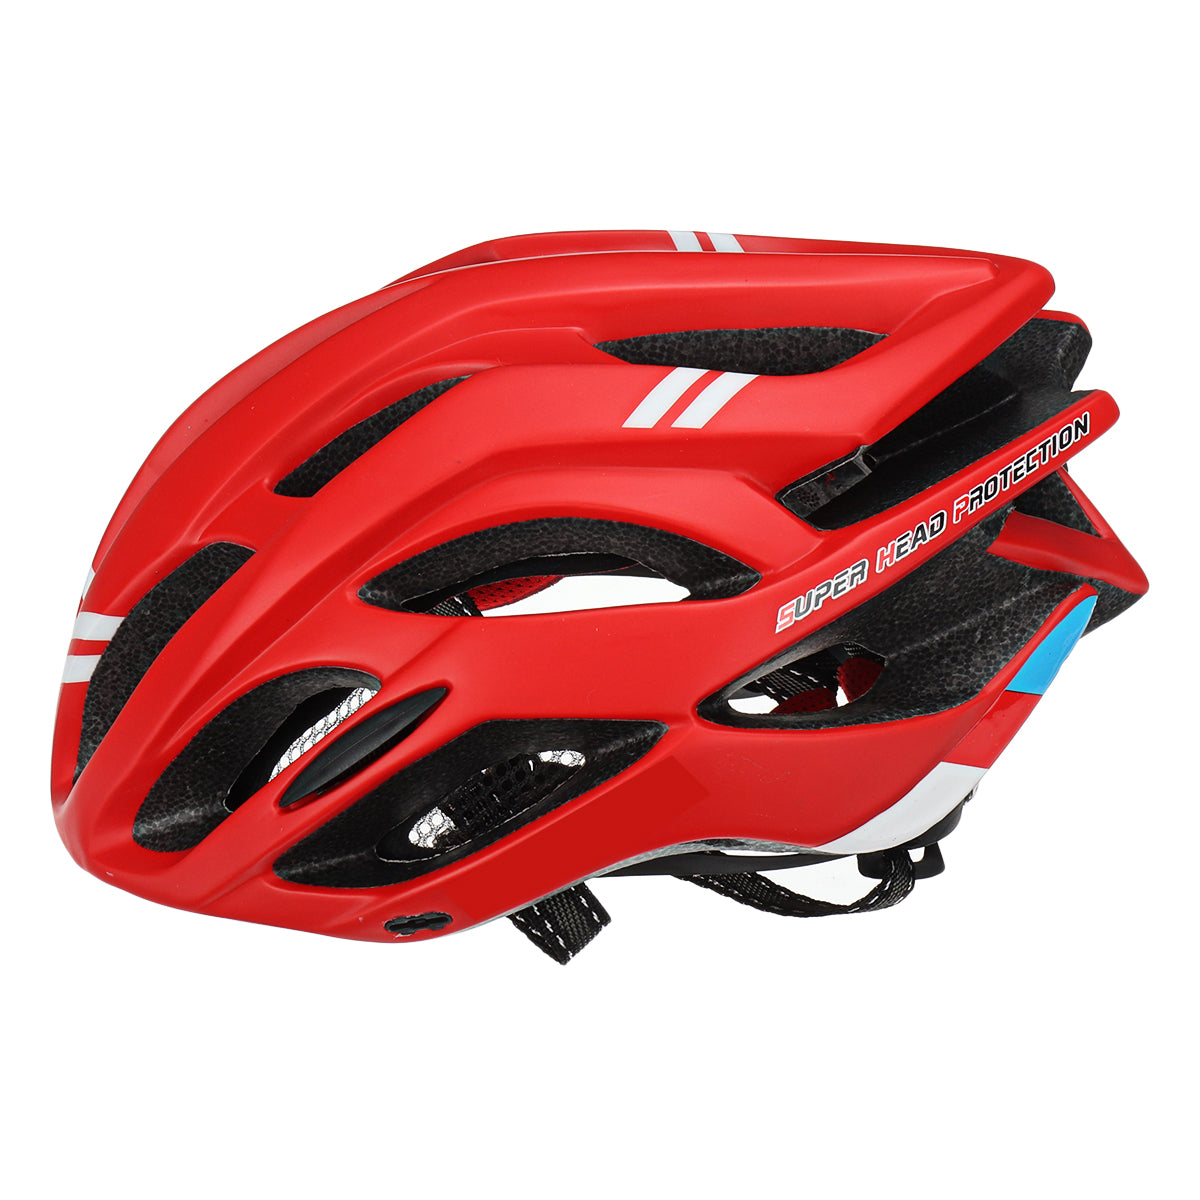 Firebrick Safety Helmet Mountain Bike Bicycle Cycling Adult Adjustable Unisex